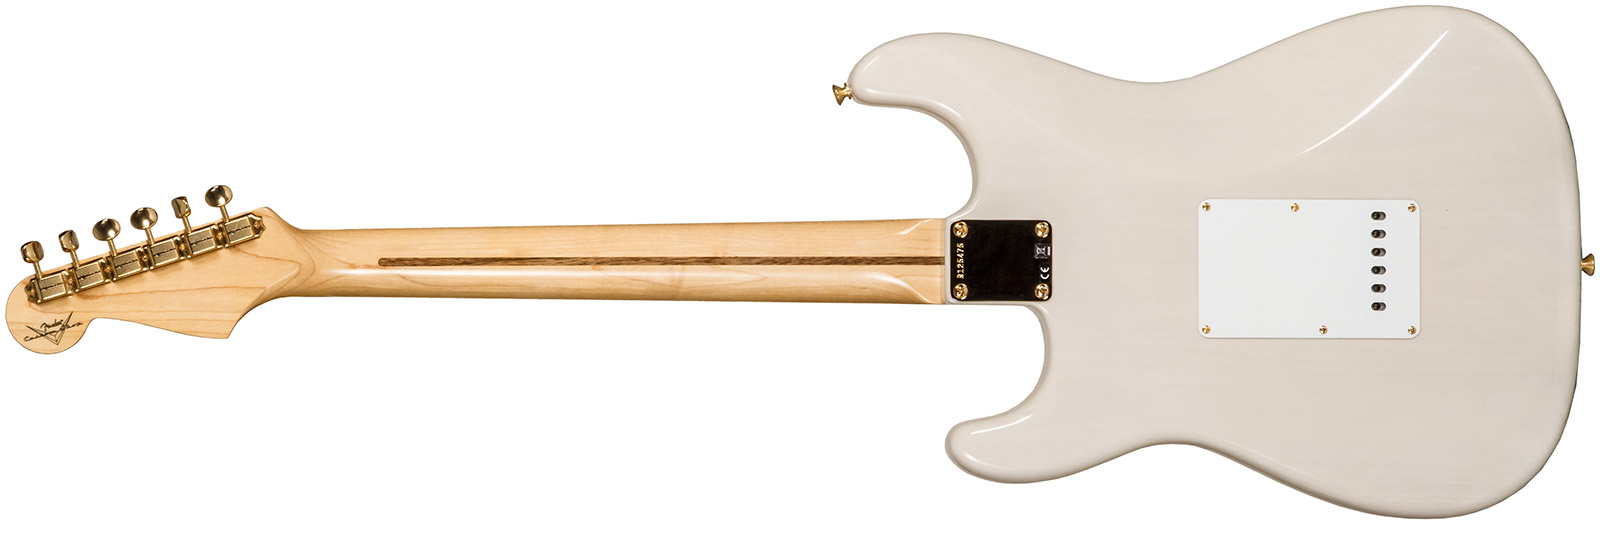 Fender Custom Shop Strat 1957 3s Trem Mn #r125475 - Nos White Blonde - Guitarra eléctrica con forma de str. - Variation 1